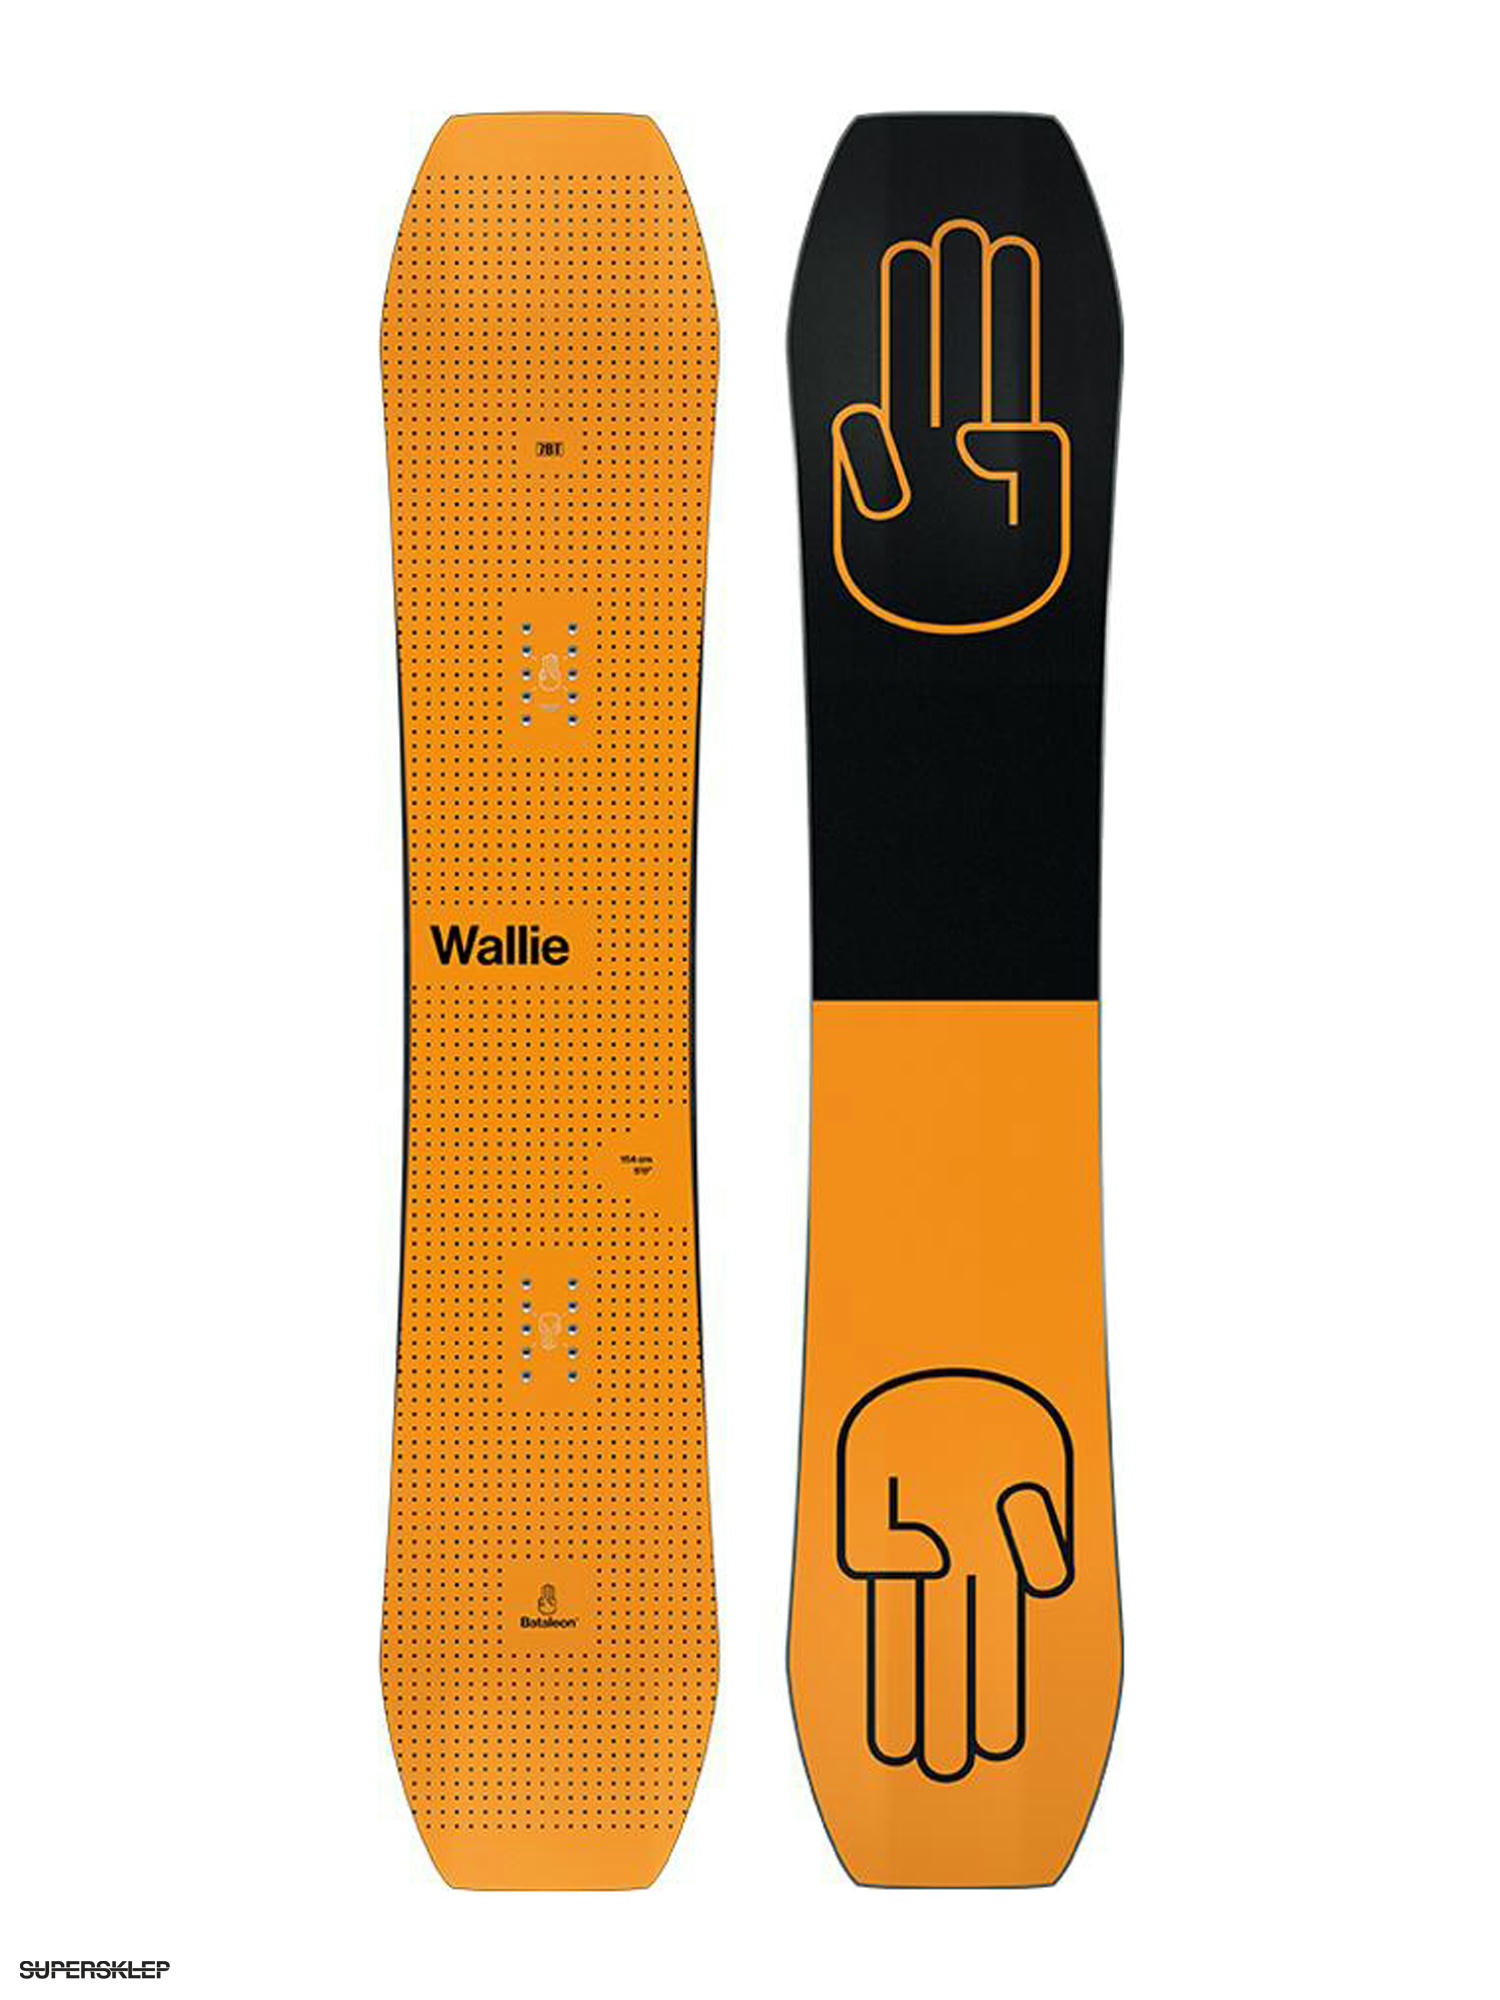 bataleon wallie 156 - スノーボード